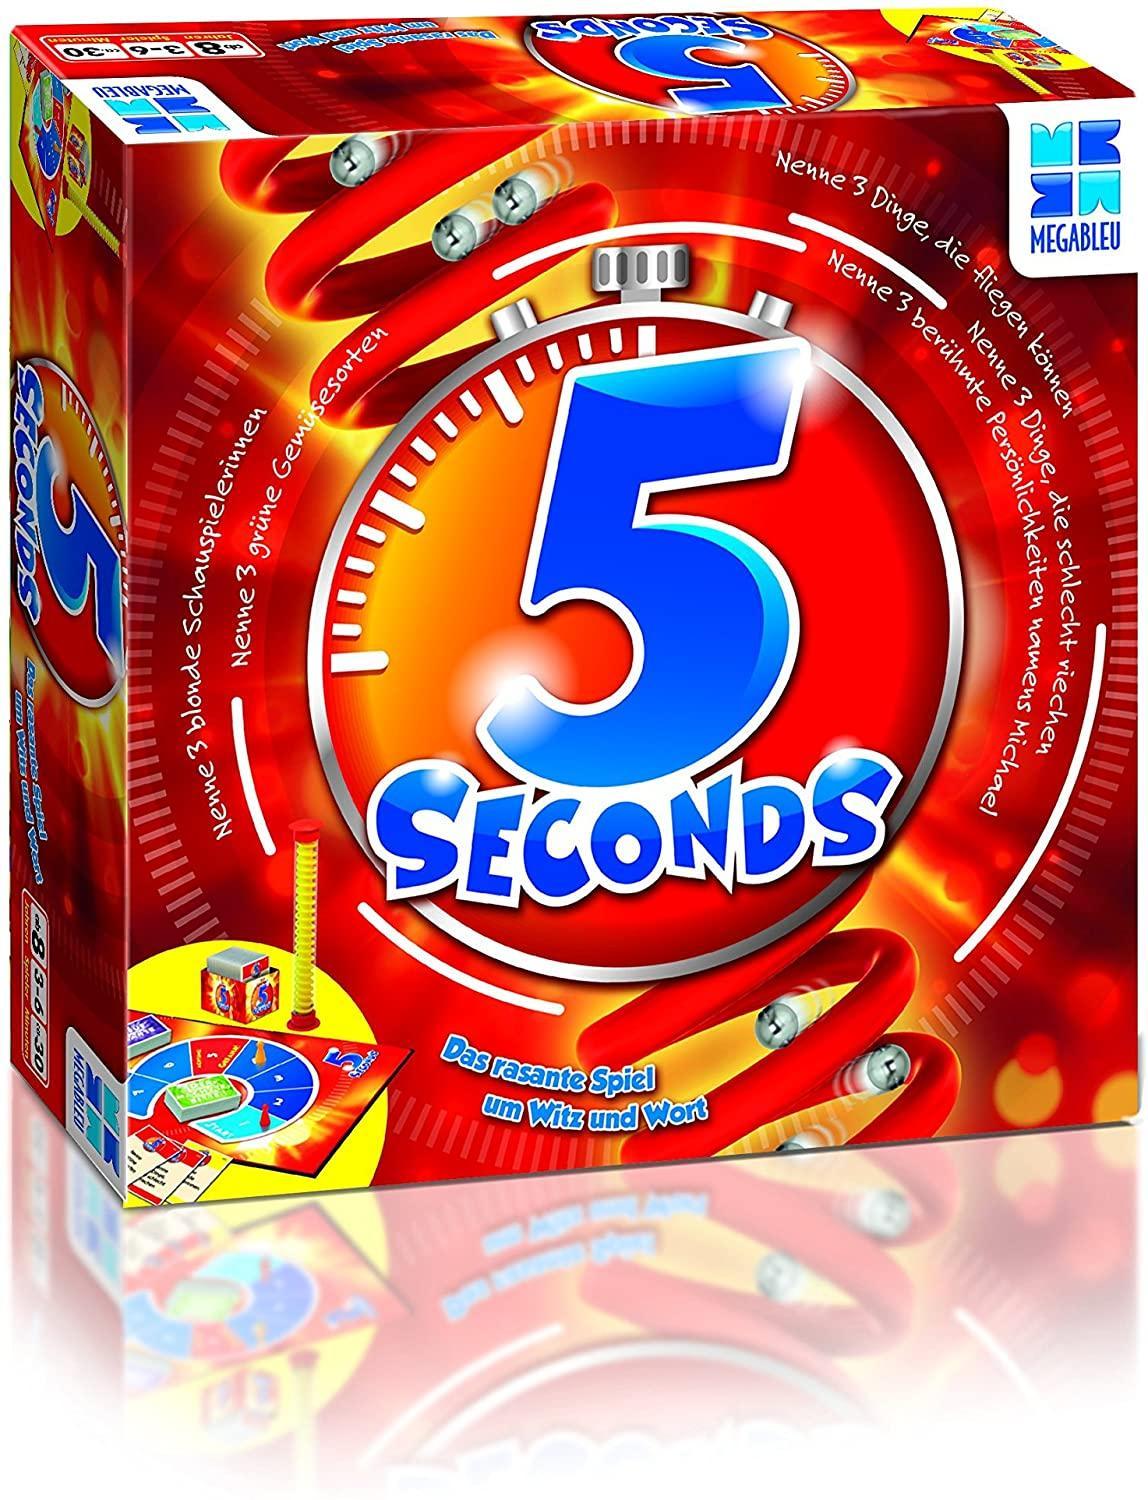 5 Seconds 5 (1)